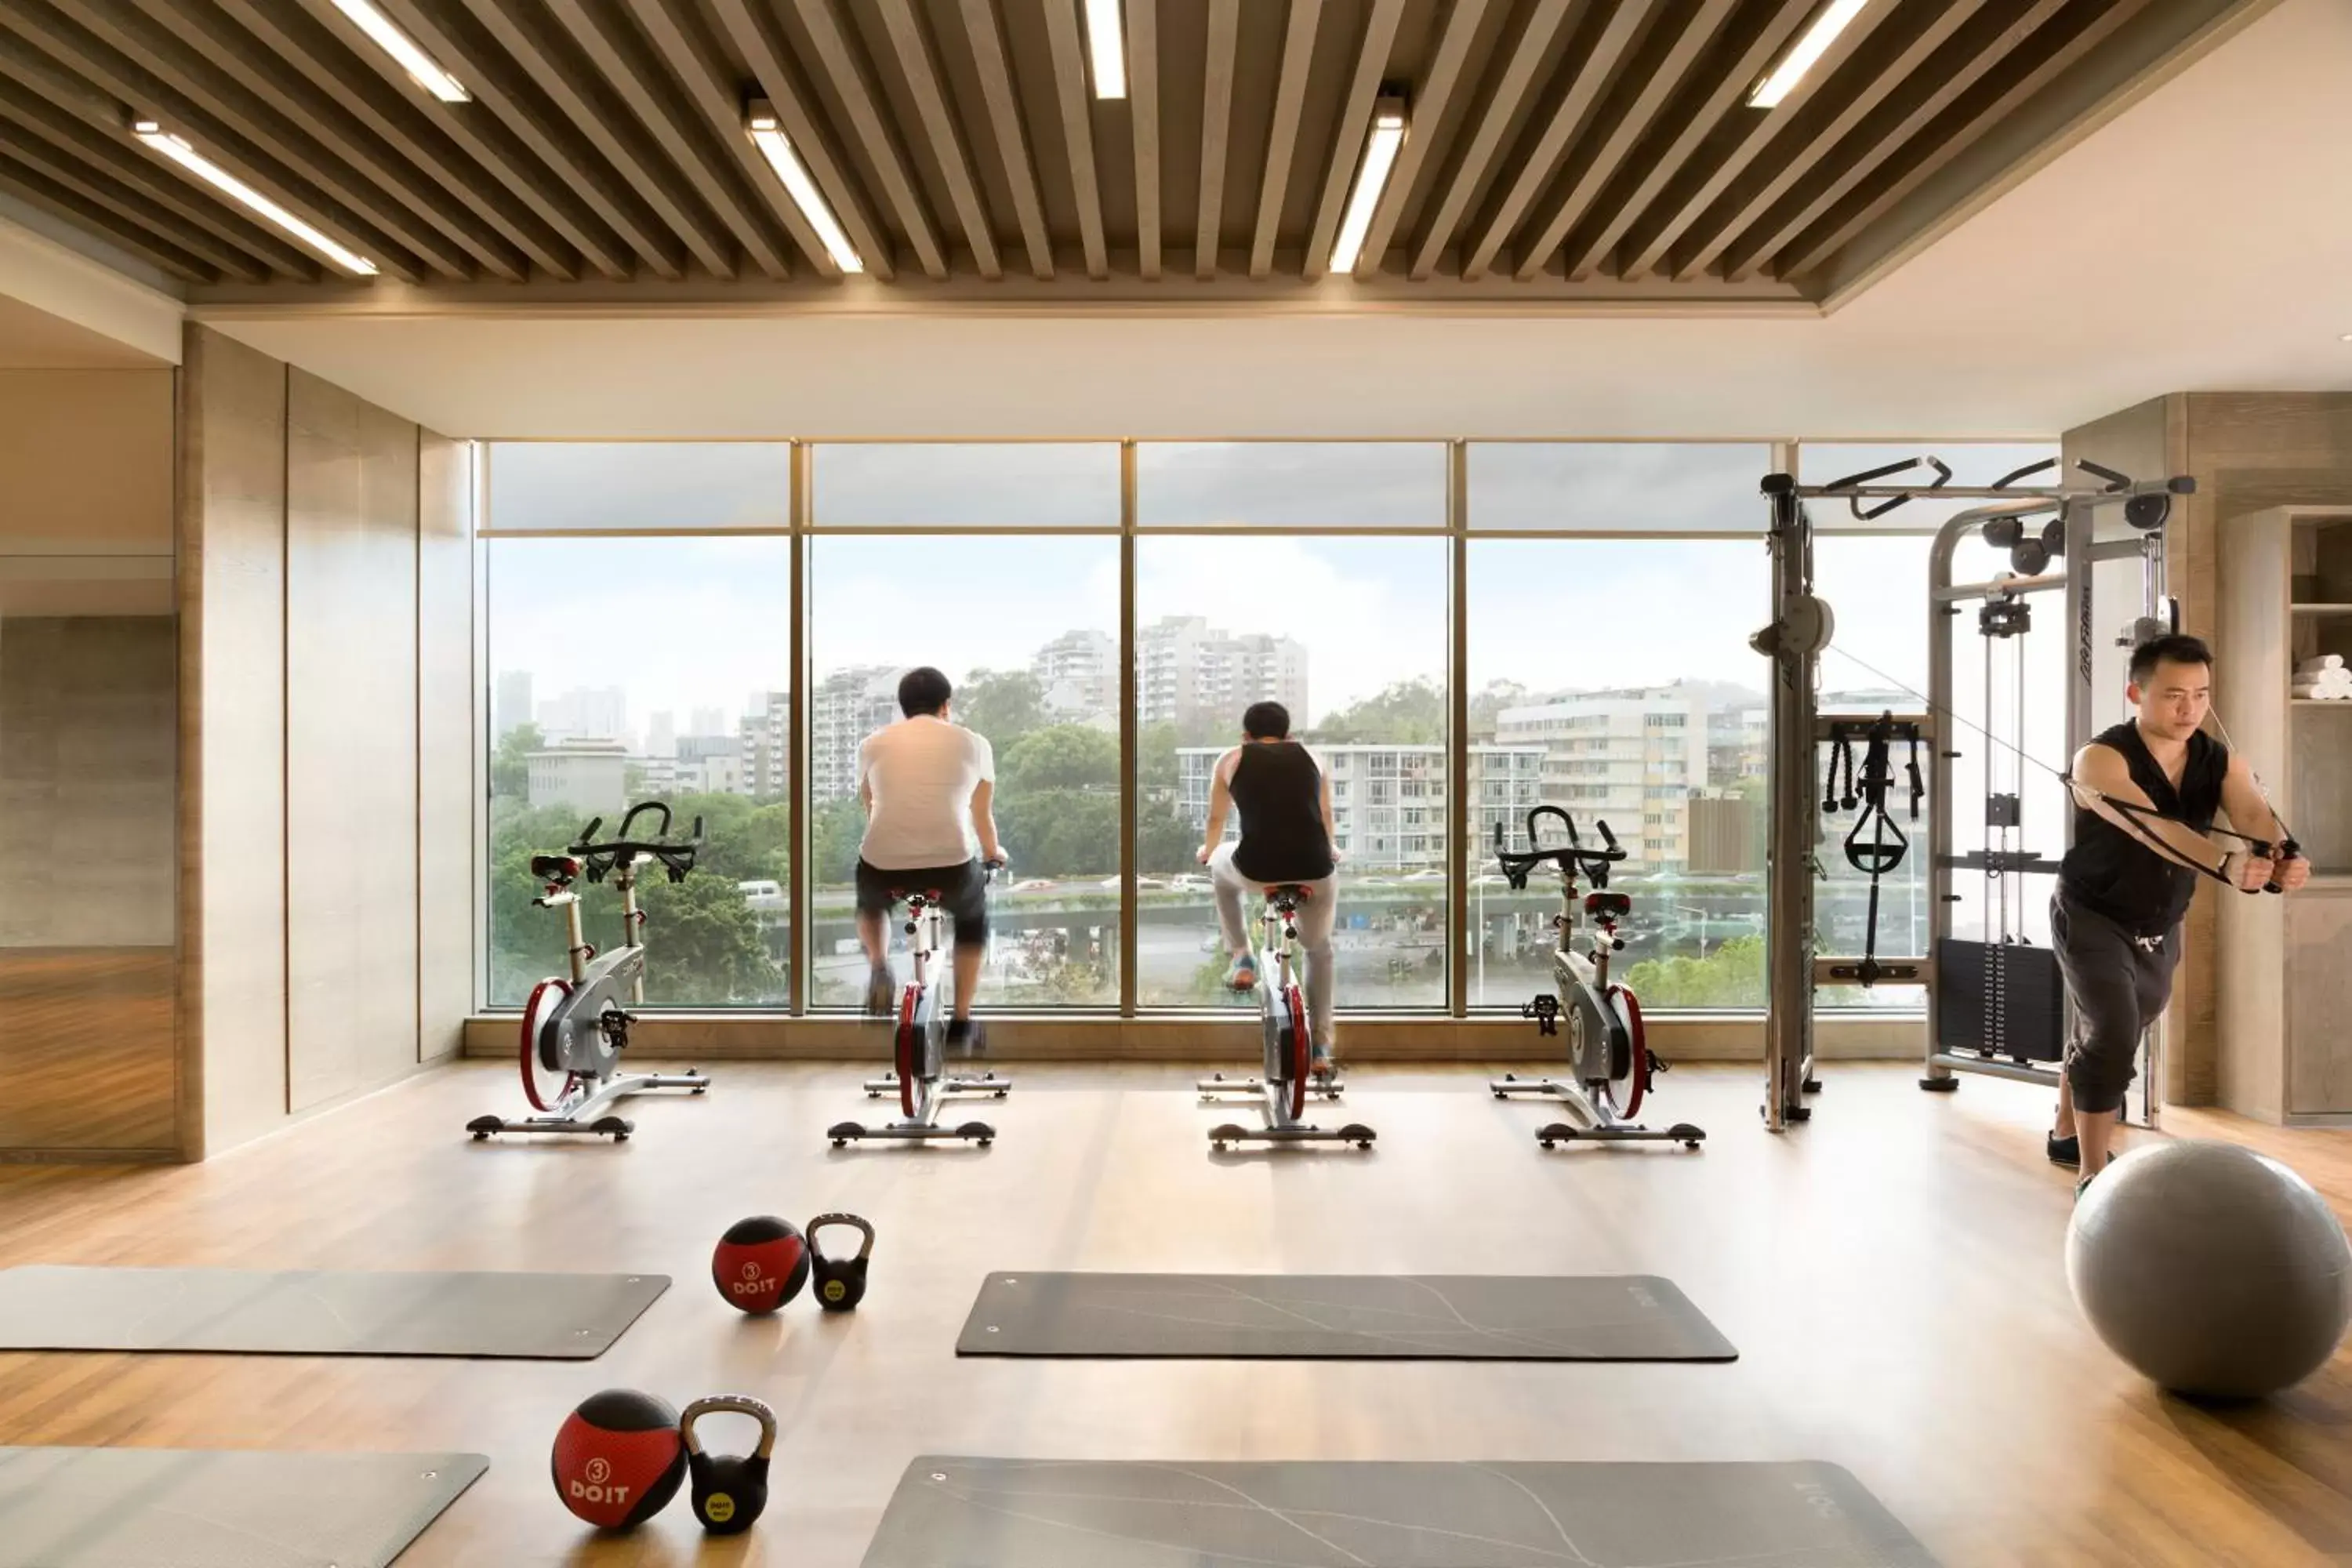 Fitness centre/facilities, Fitness Center/Facilities in Kempinski Hotel Fuzhou